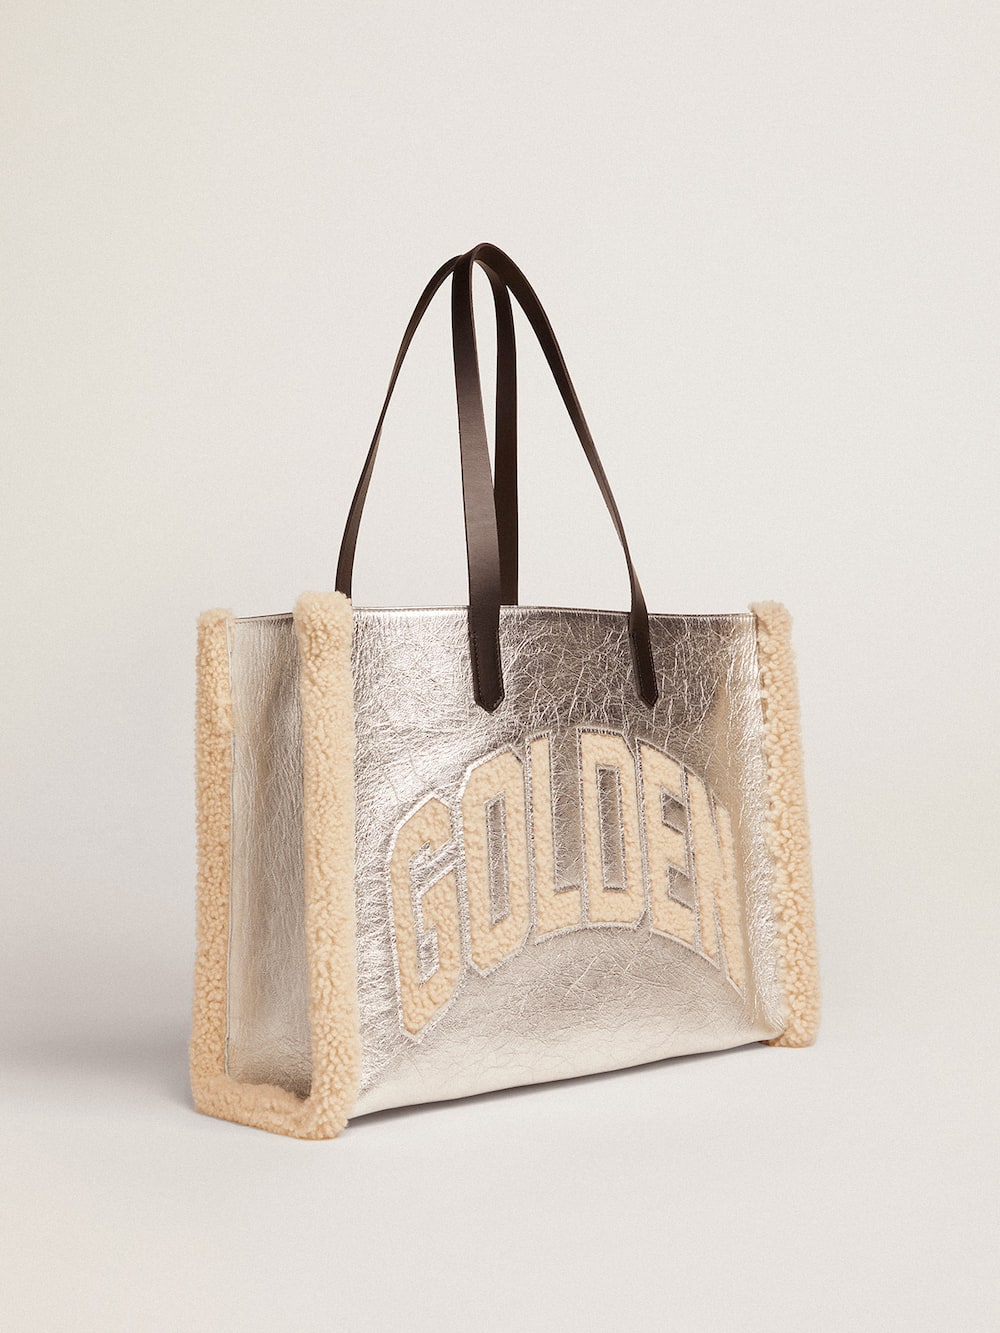 Golden Goose - California Bag East-West in pelle laminata argento e inserti in lana in 